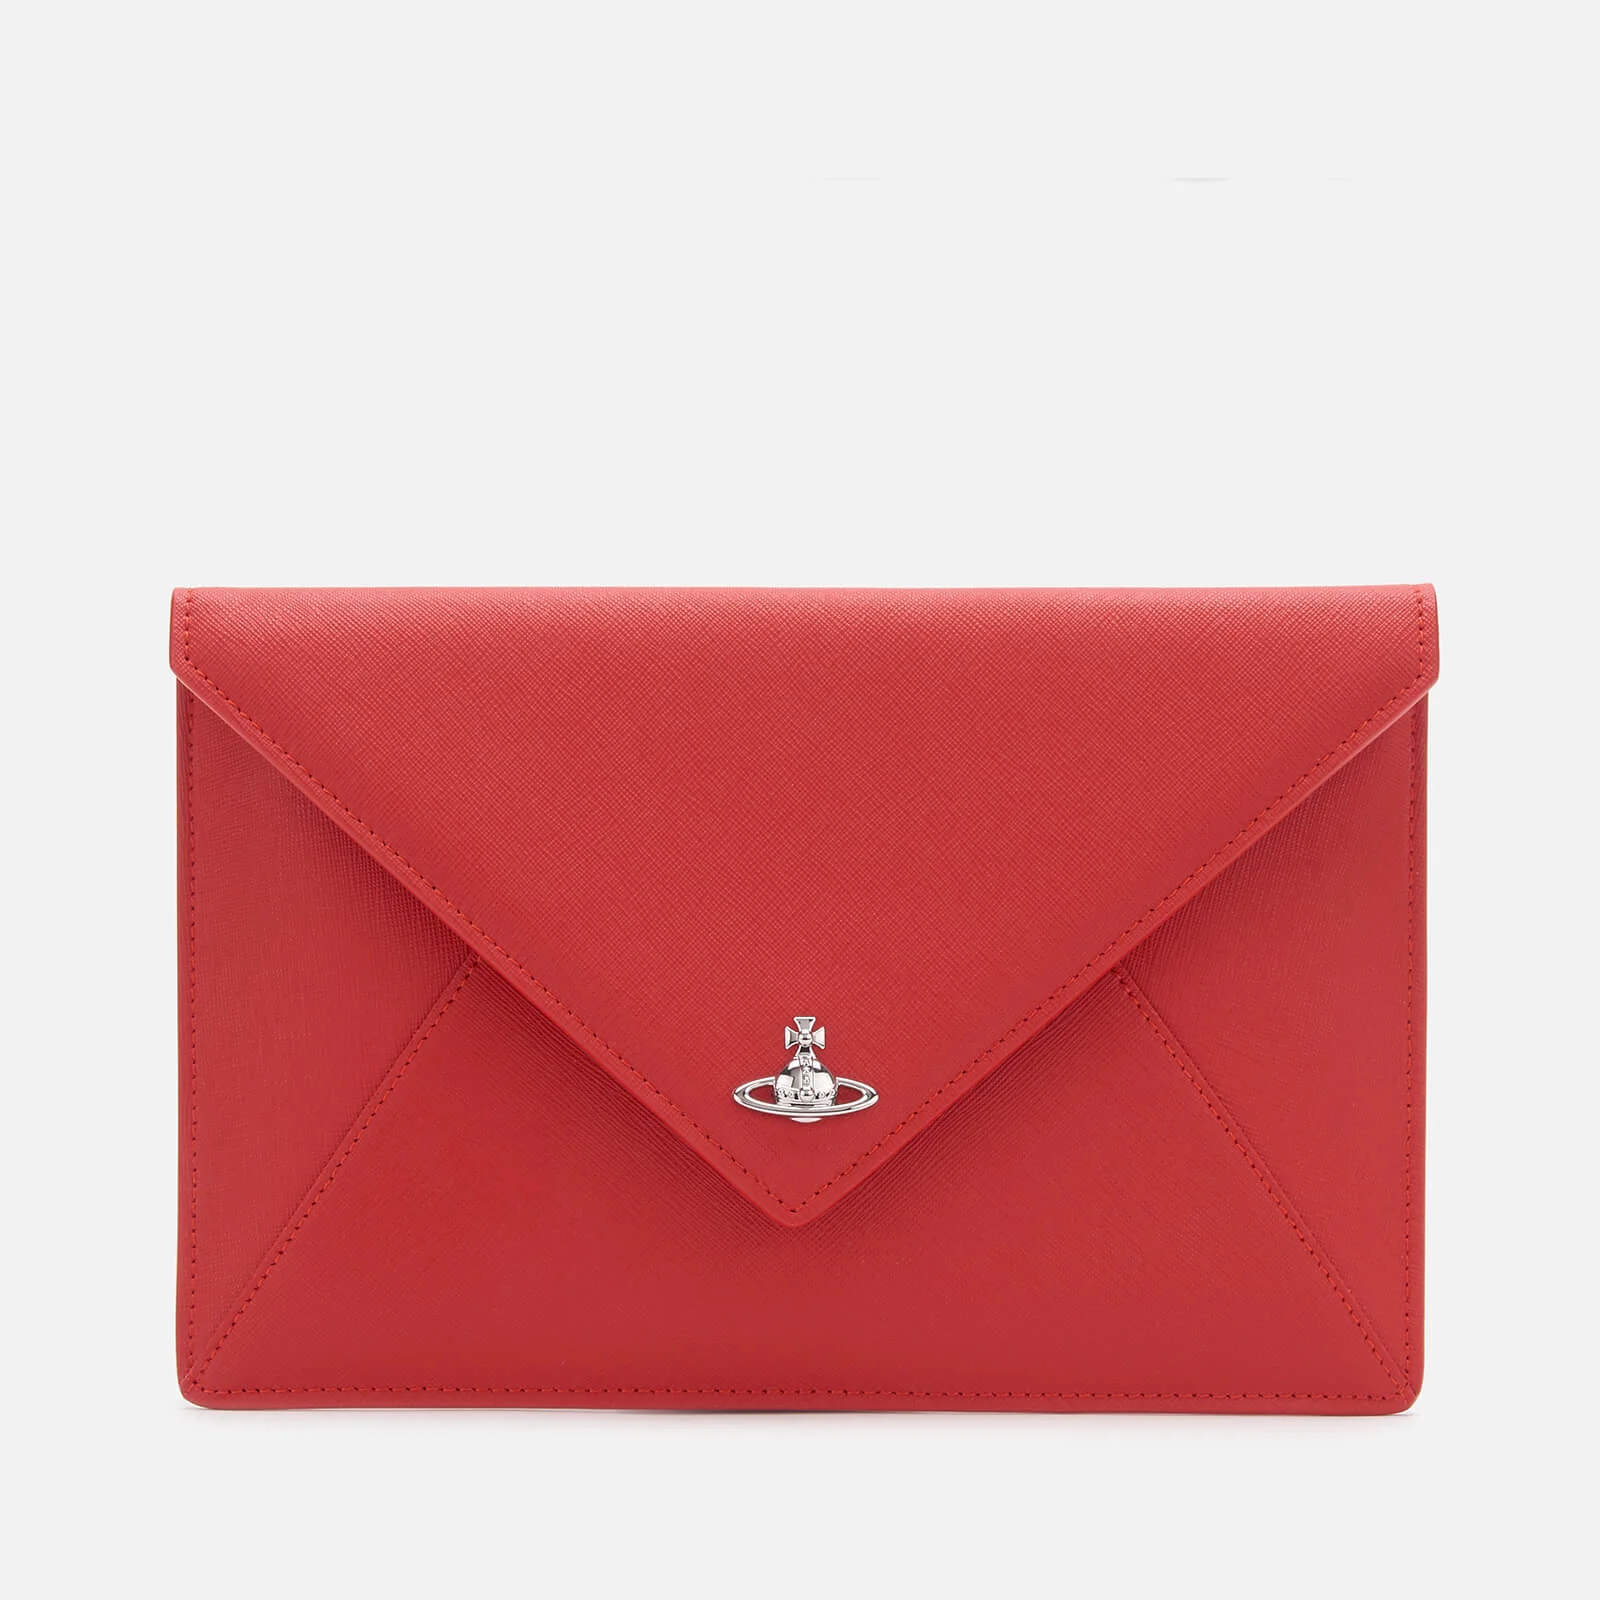 Vivienne Westwood Women's Victoria Envelope Clutch - Red Image 1